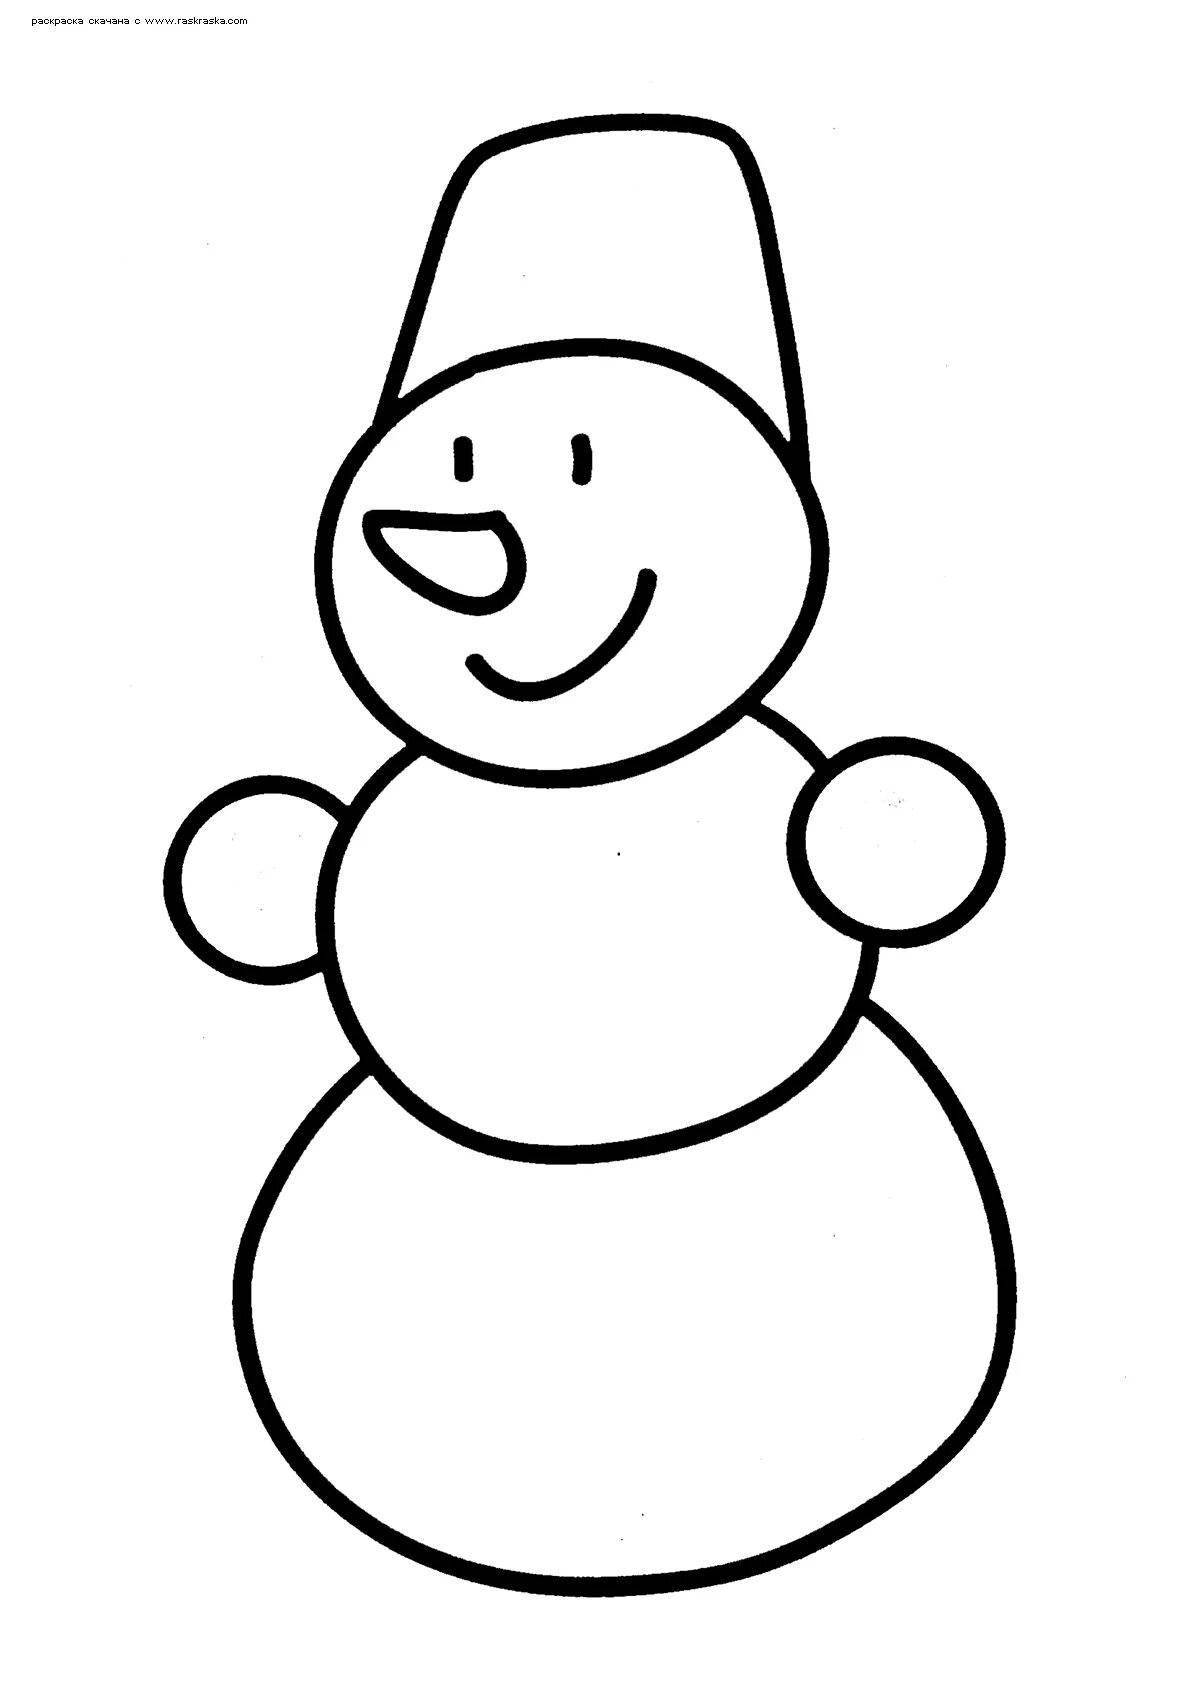 Joyful snowman coloring book in color